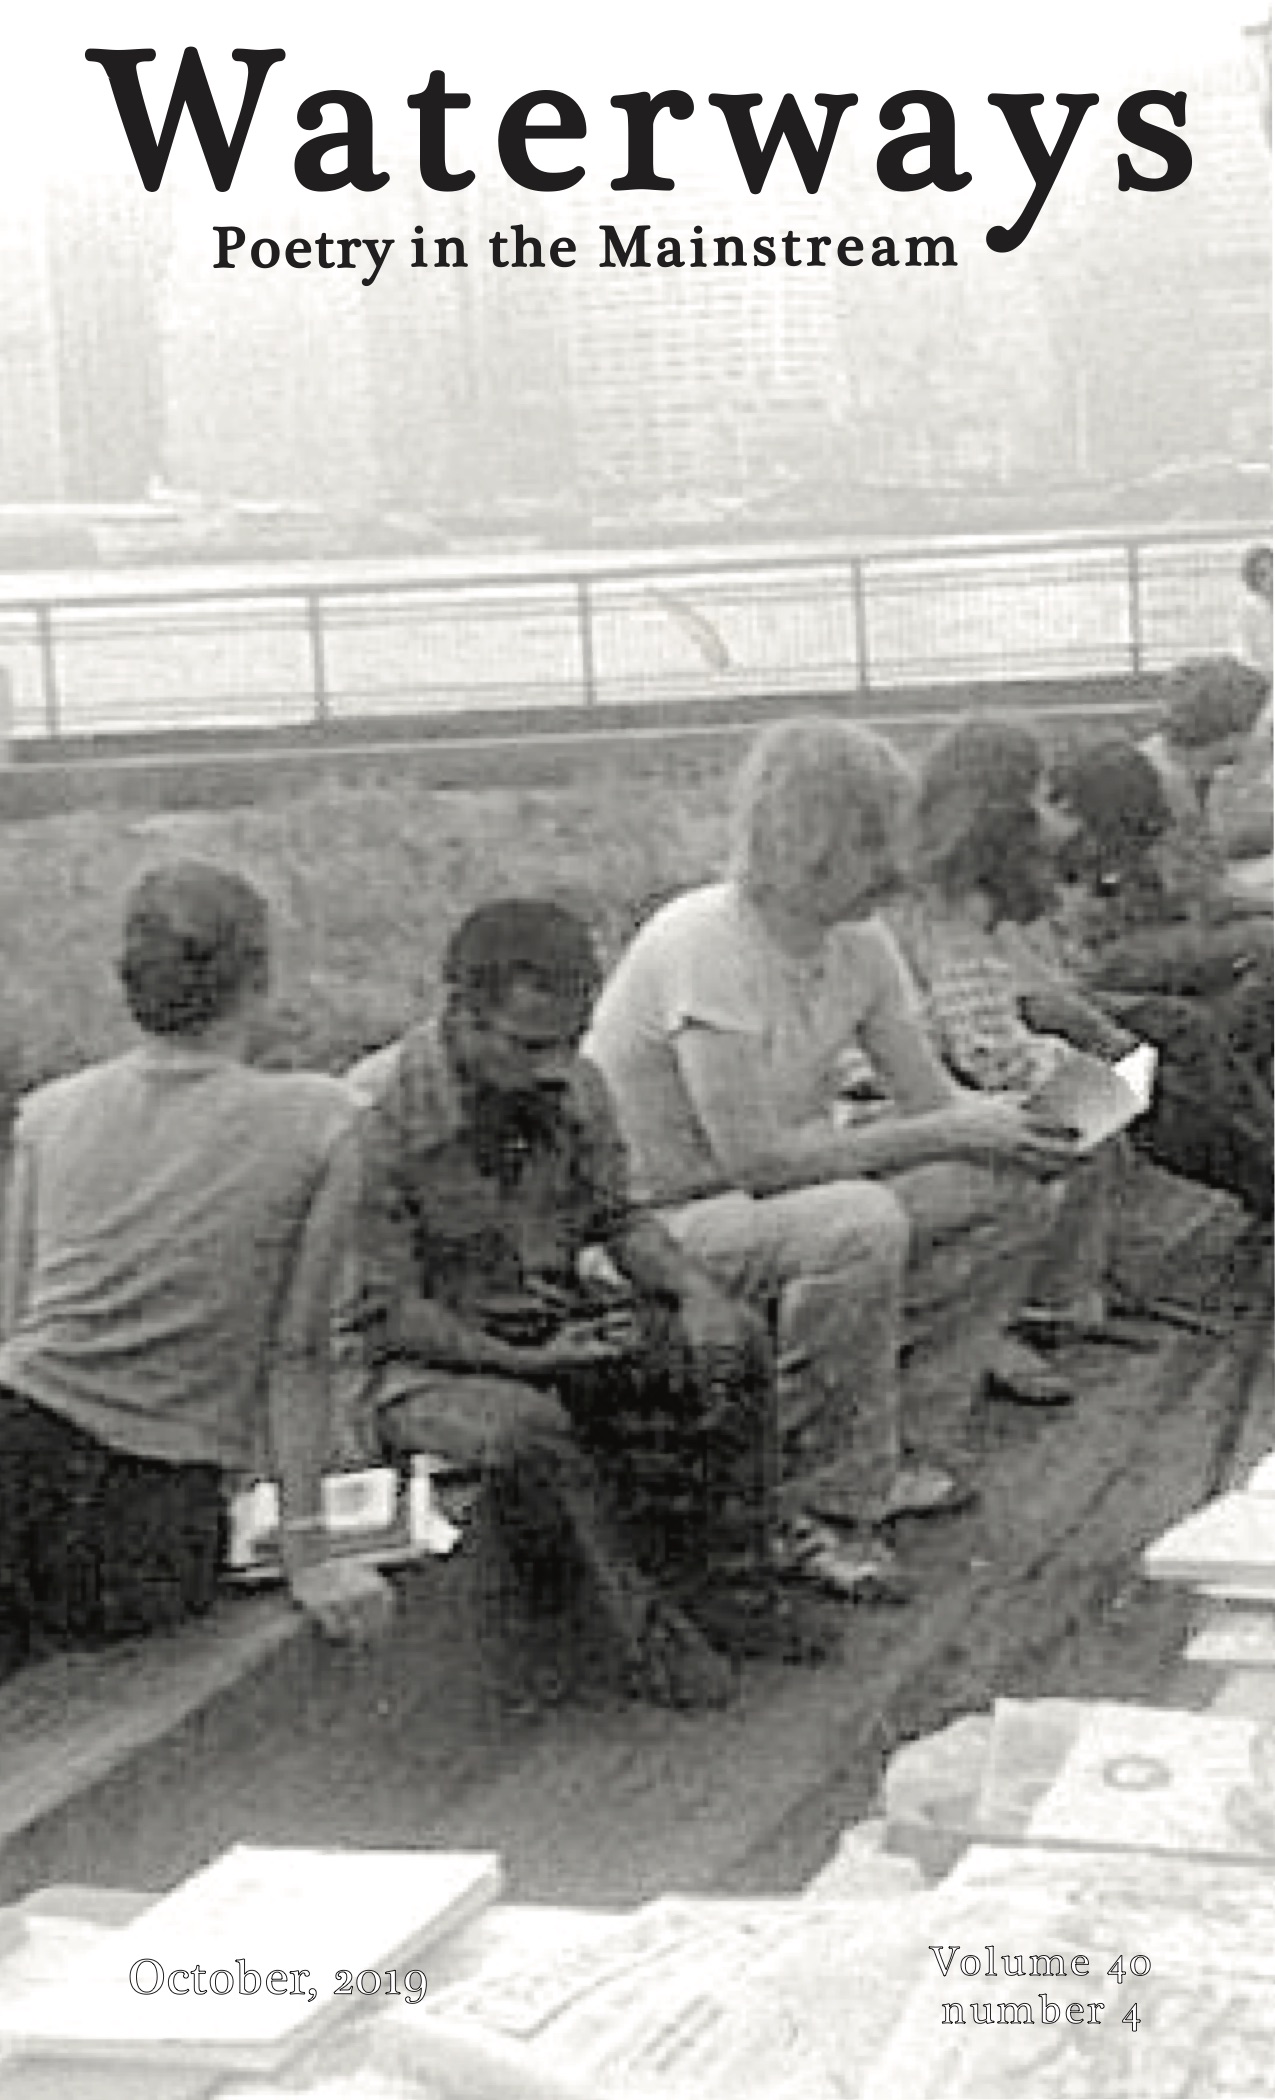 Photo taken at Waterways book fair at Brooklyn Ferry Landing 1979